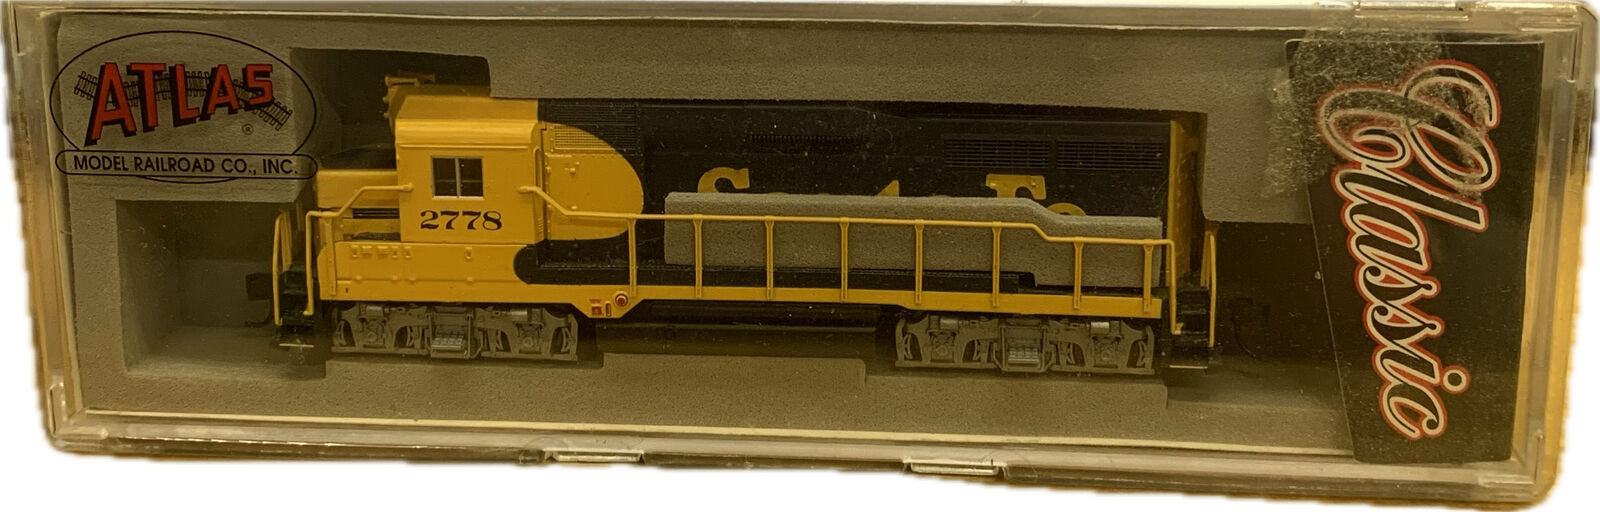 Atlas Classic N Scale GP-30 Santa Fe #2778 Locomotive - Open Package, (9293386)